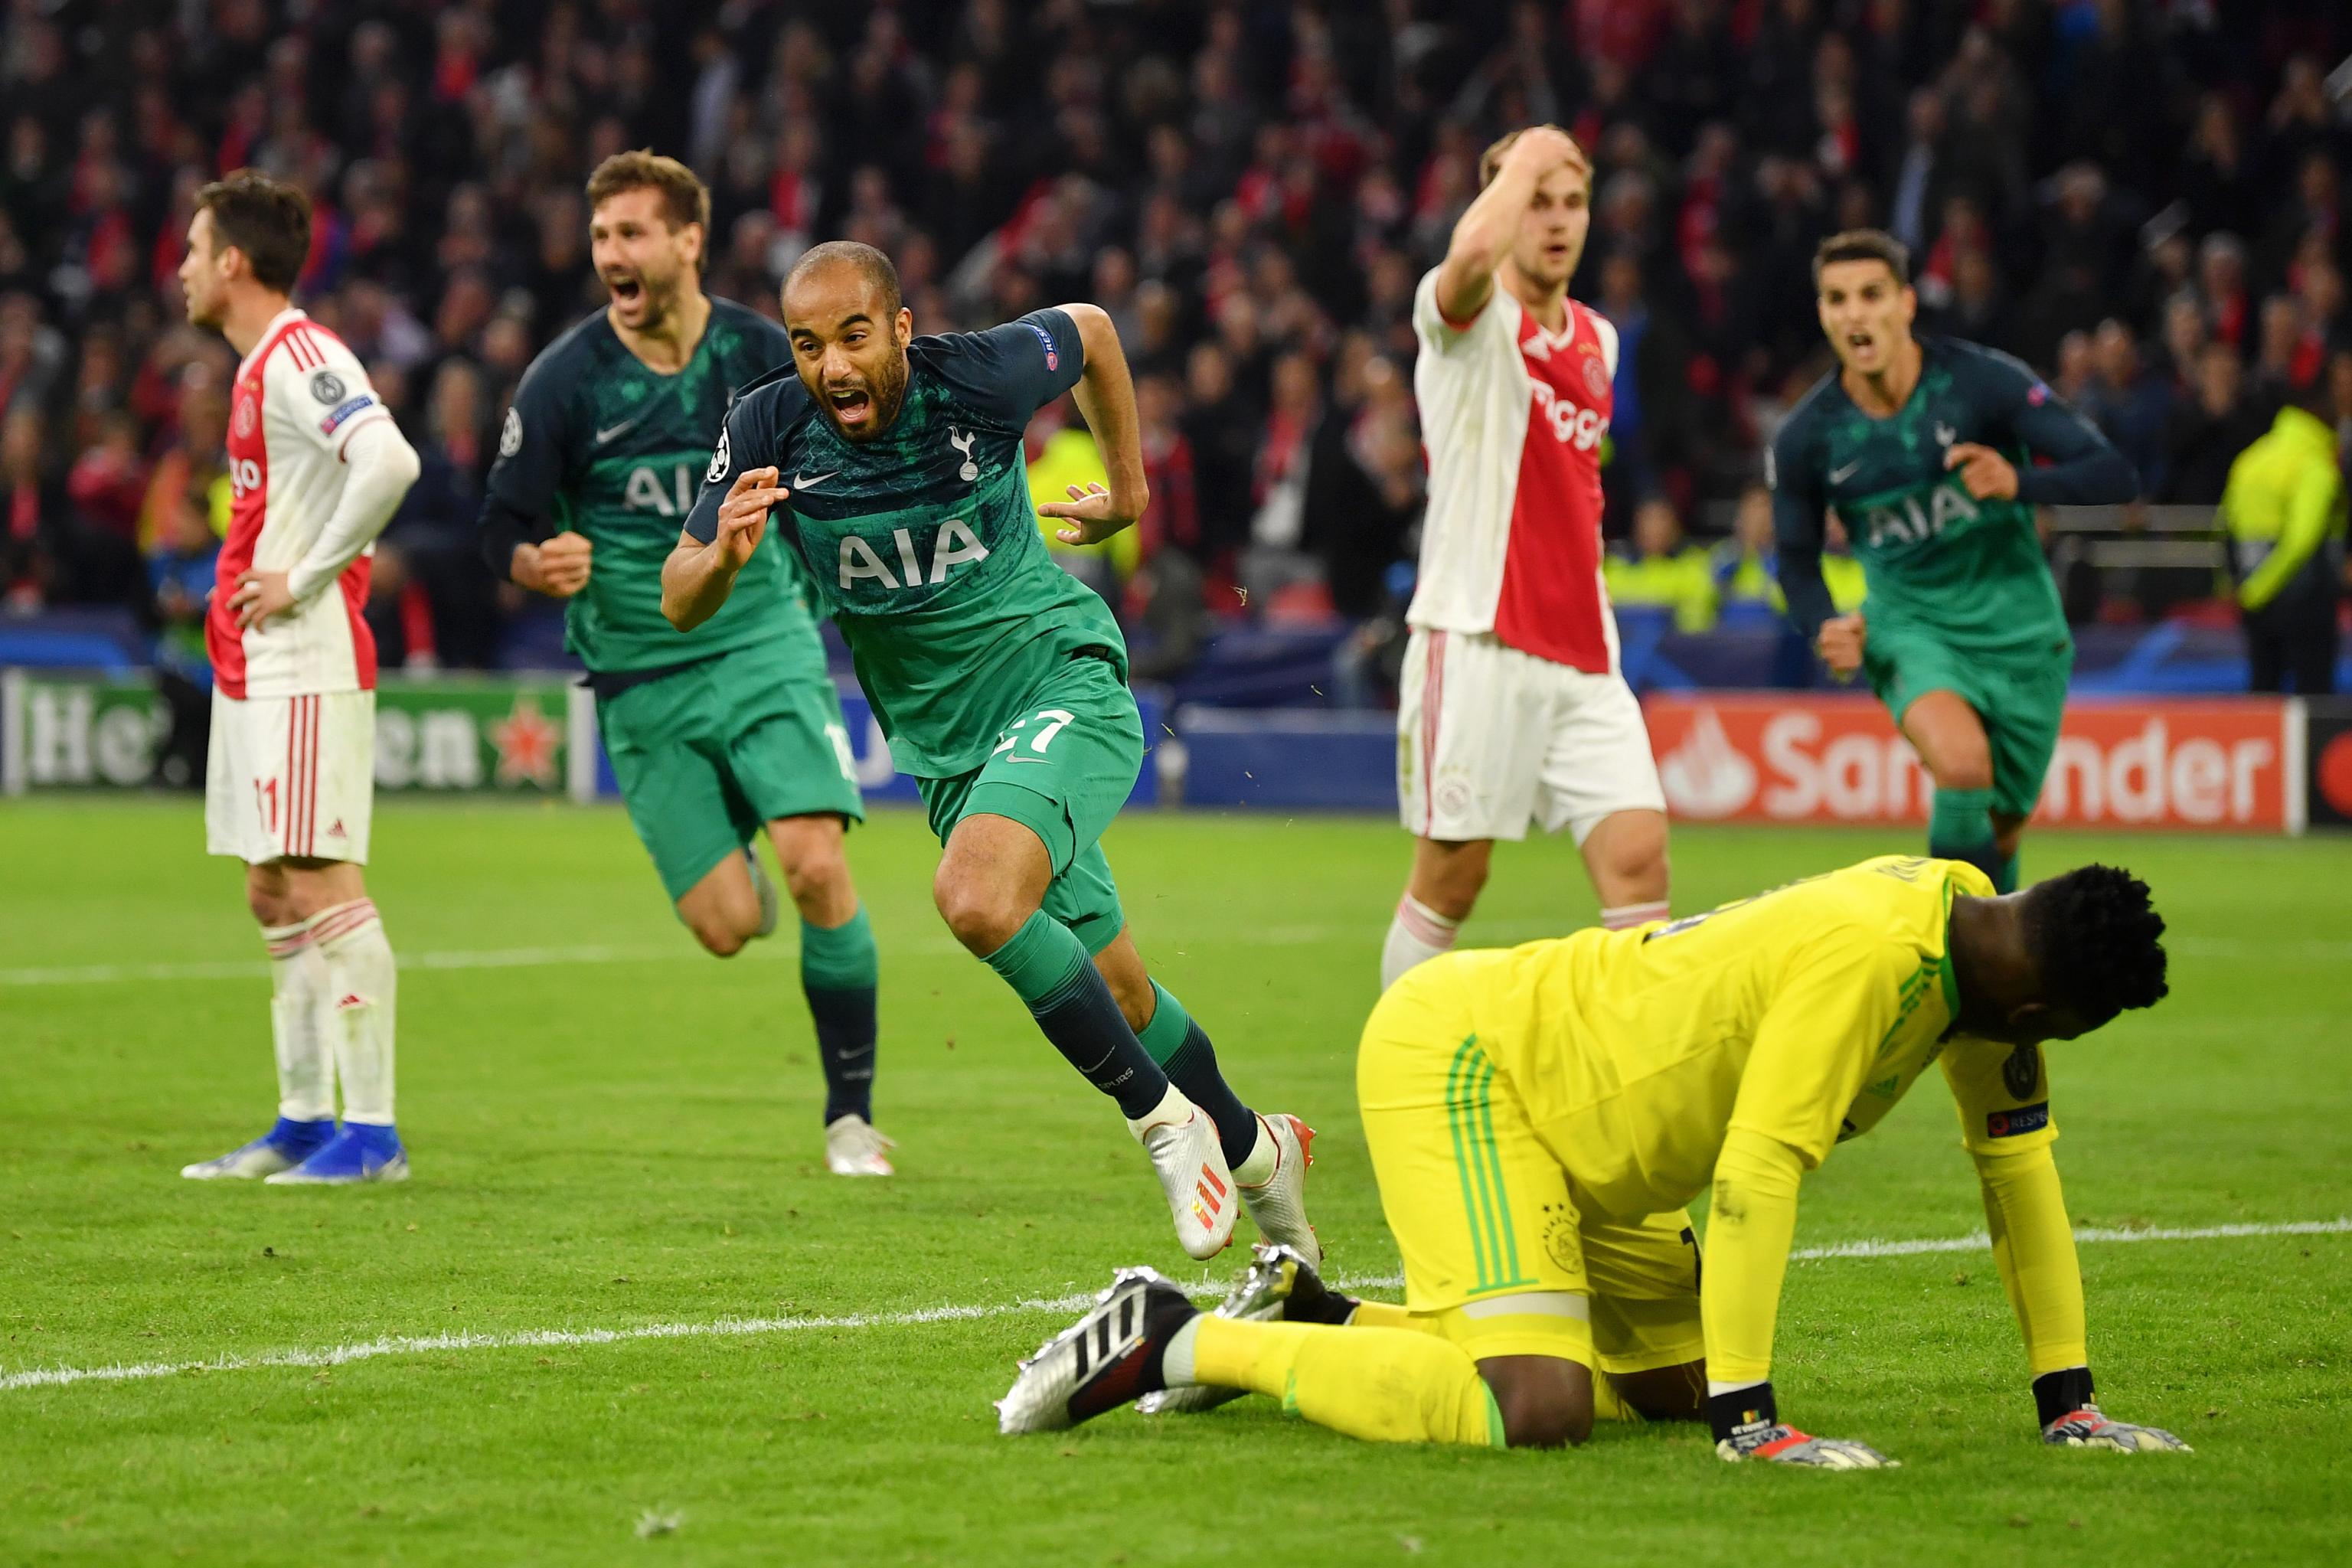 Lucas Moura S Hat Trick Stuns Ajax Leads Tottenham To Ucl Final Vs Liverpool Bleacher Report Latest News Videos And Highlights